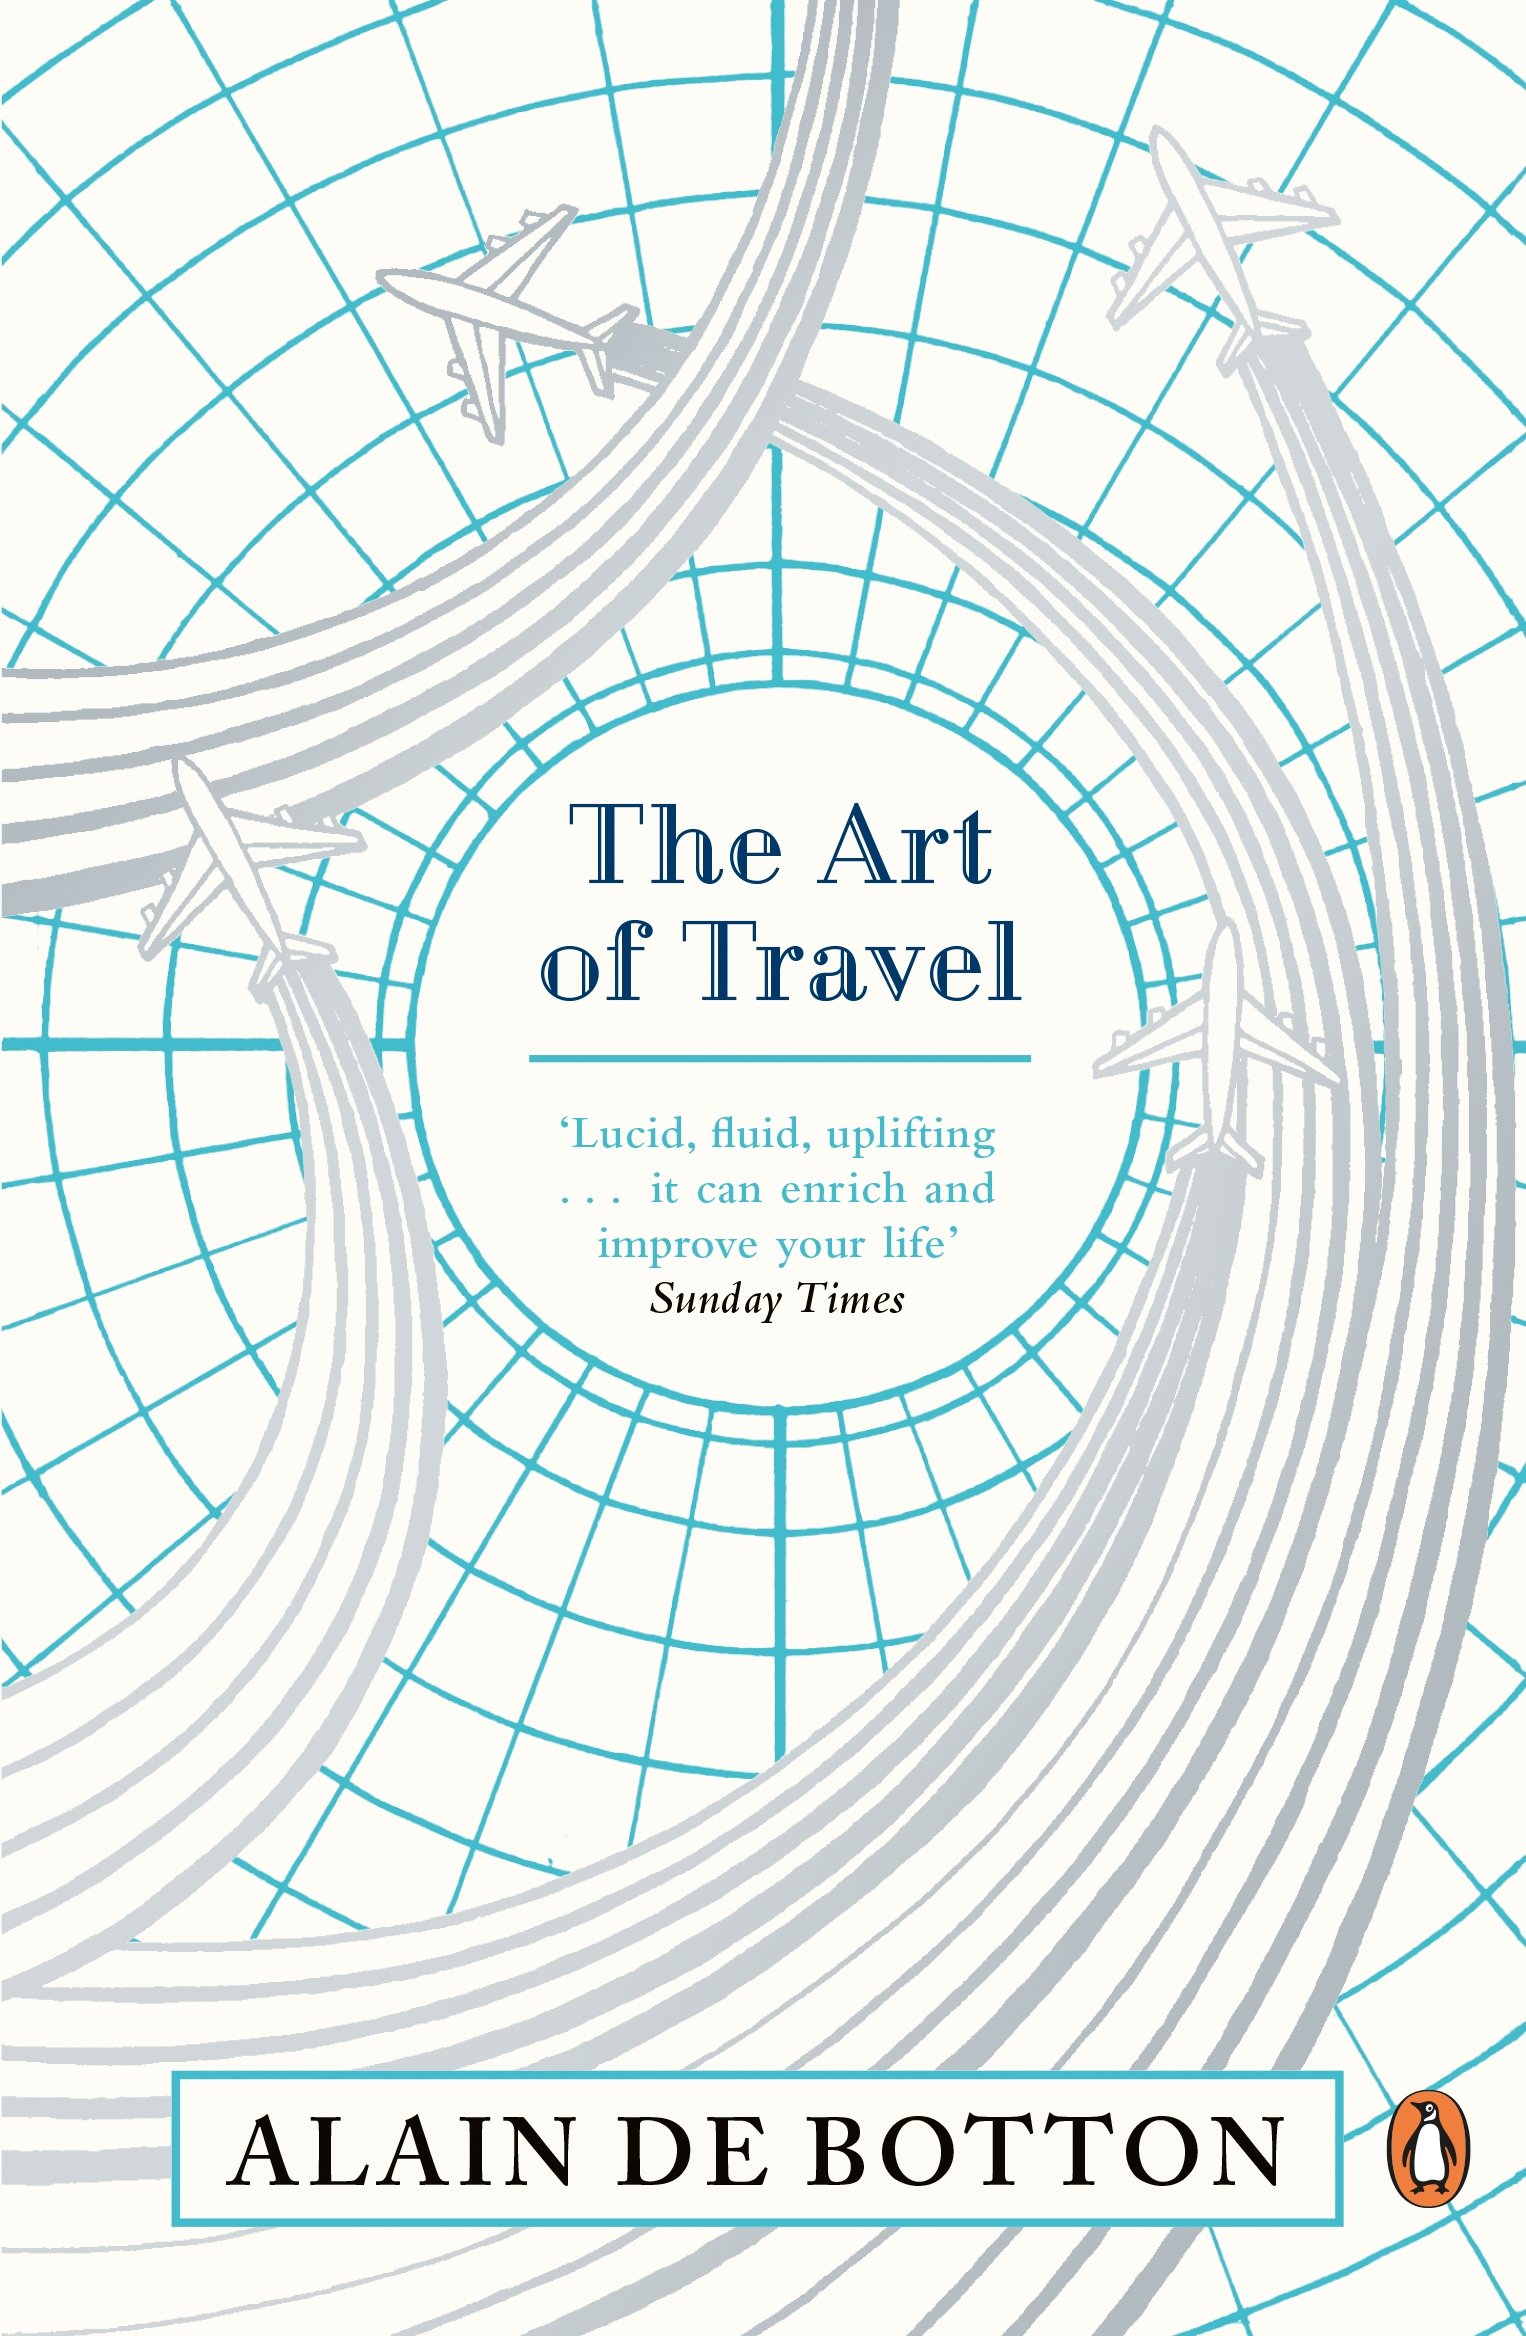 The Wick - Objects Alain de Botton, The Art of Travel